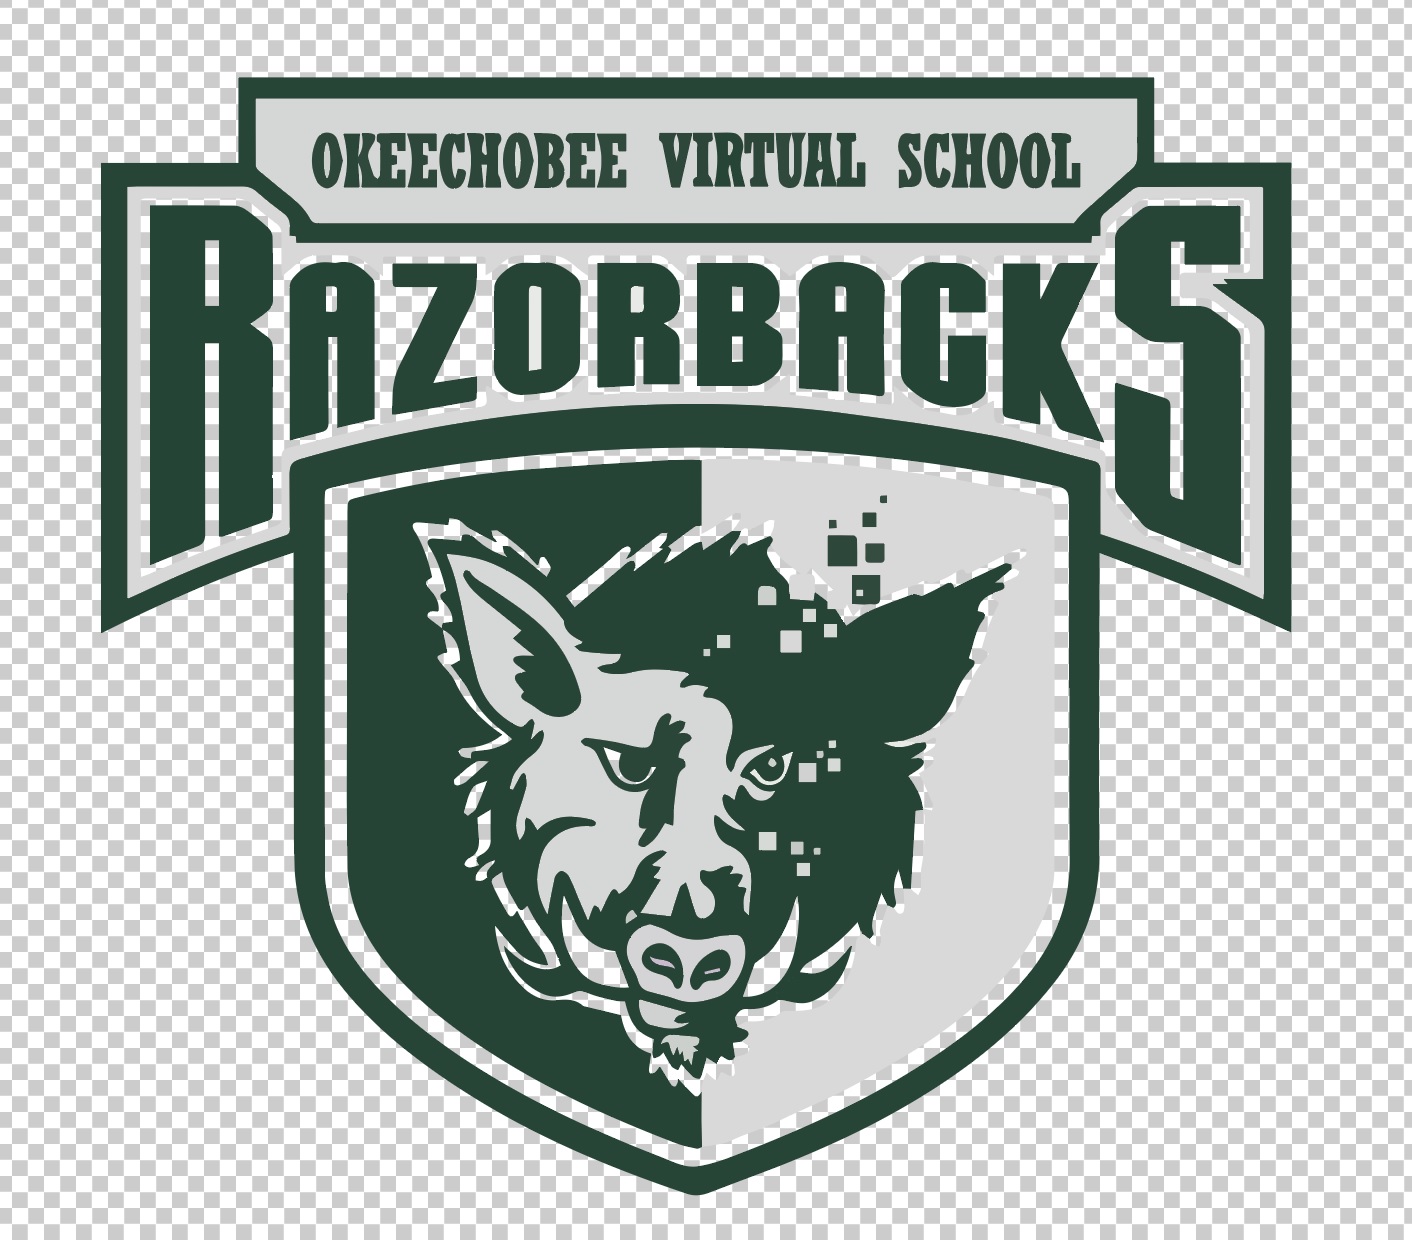 Okeechobee Virtual School Logo